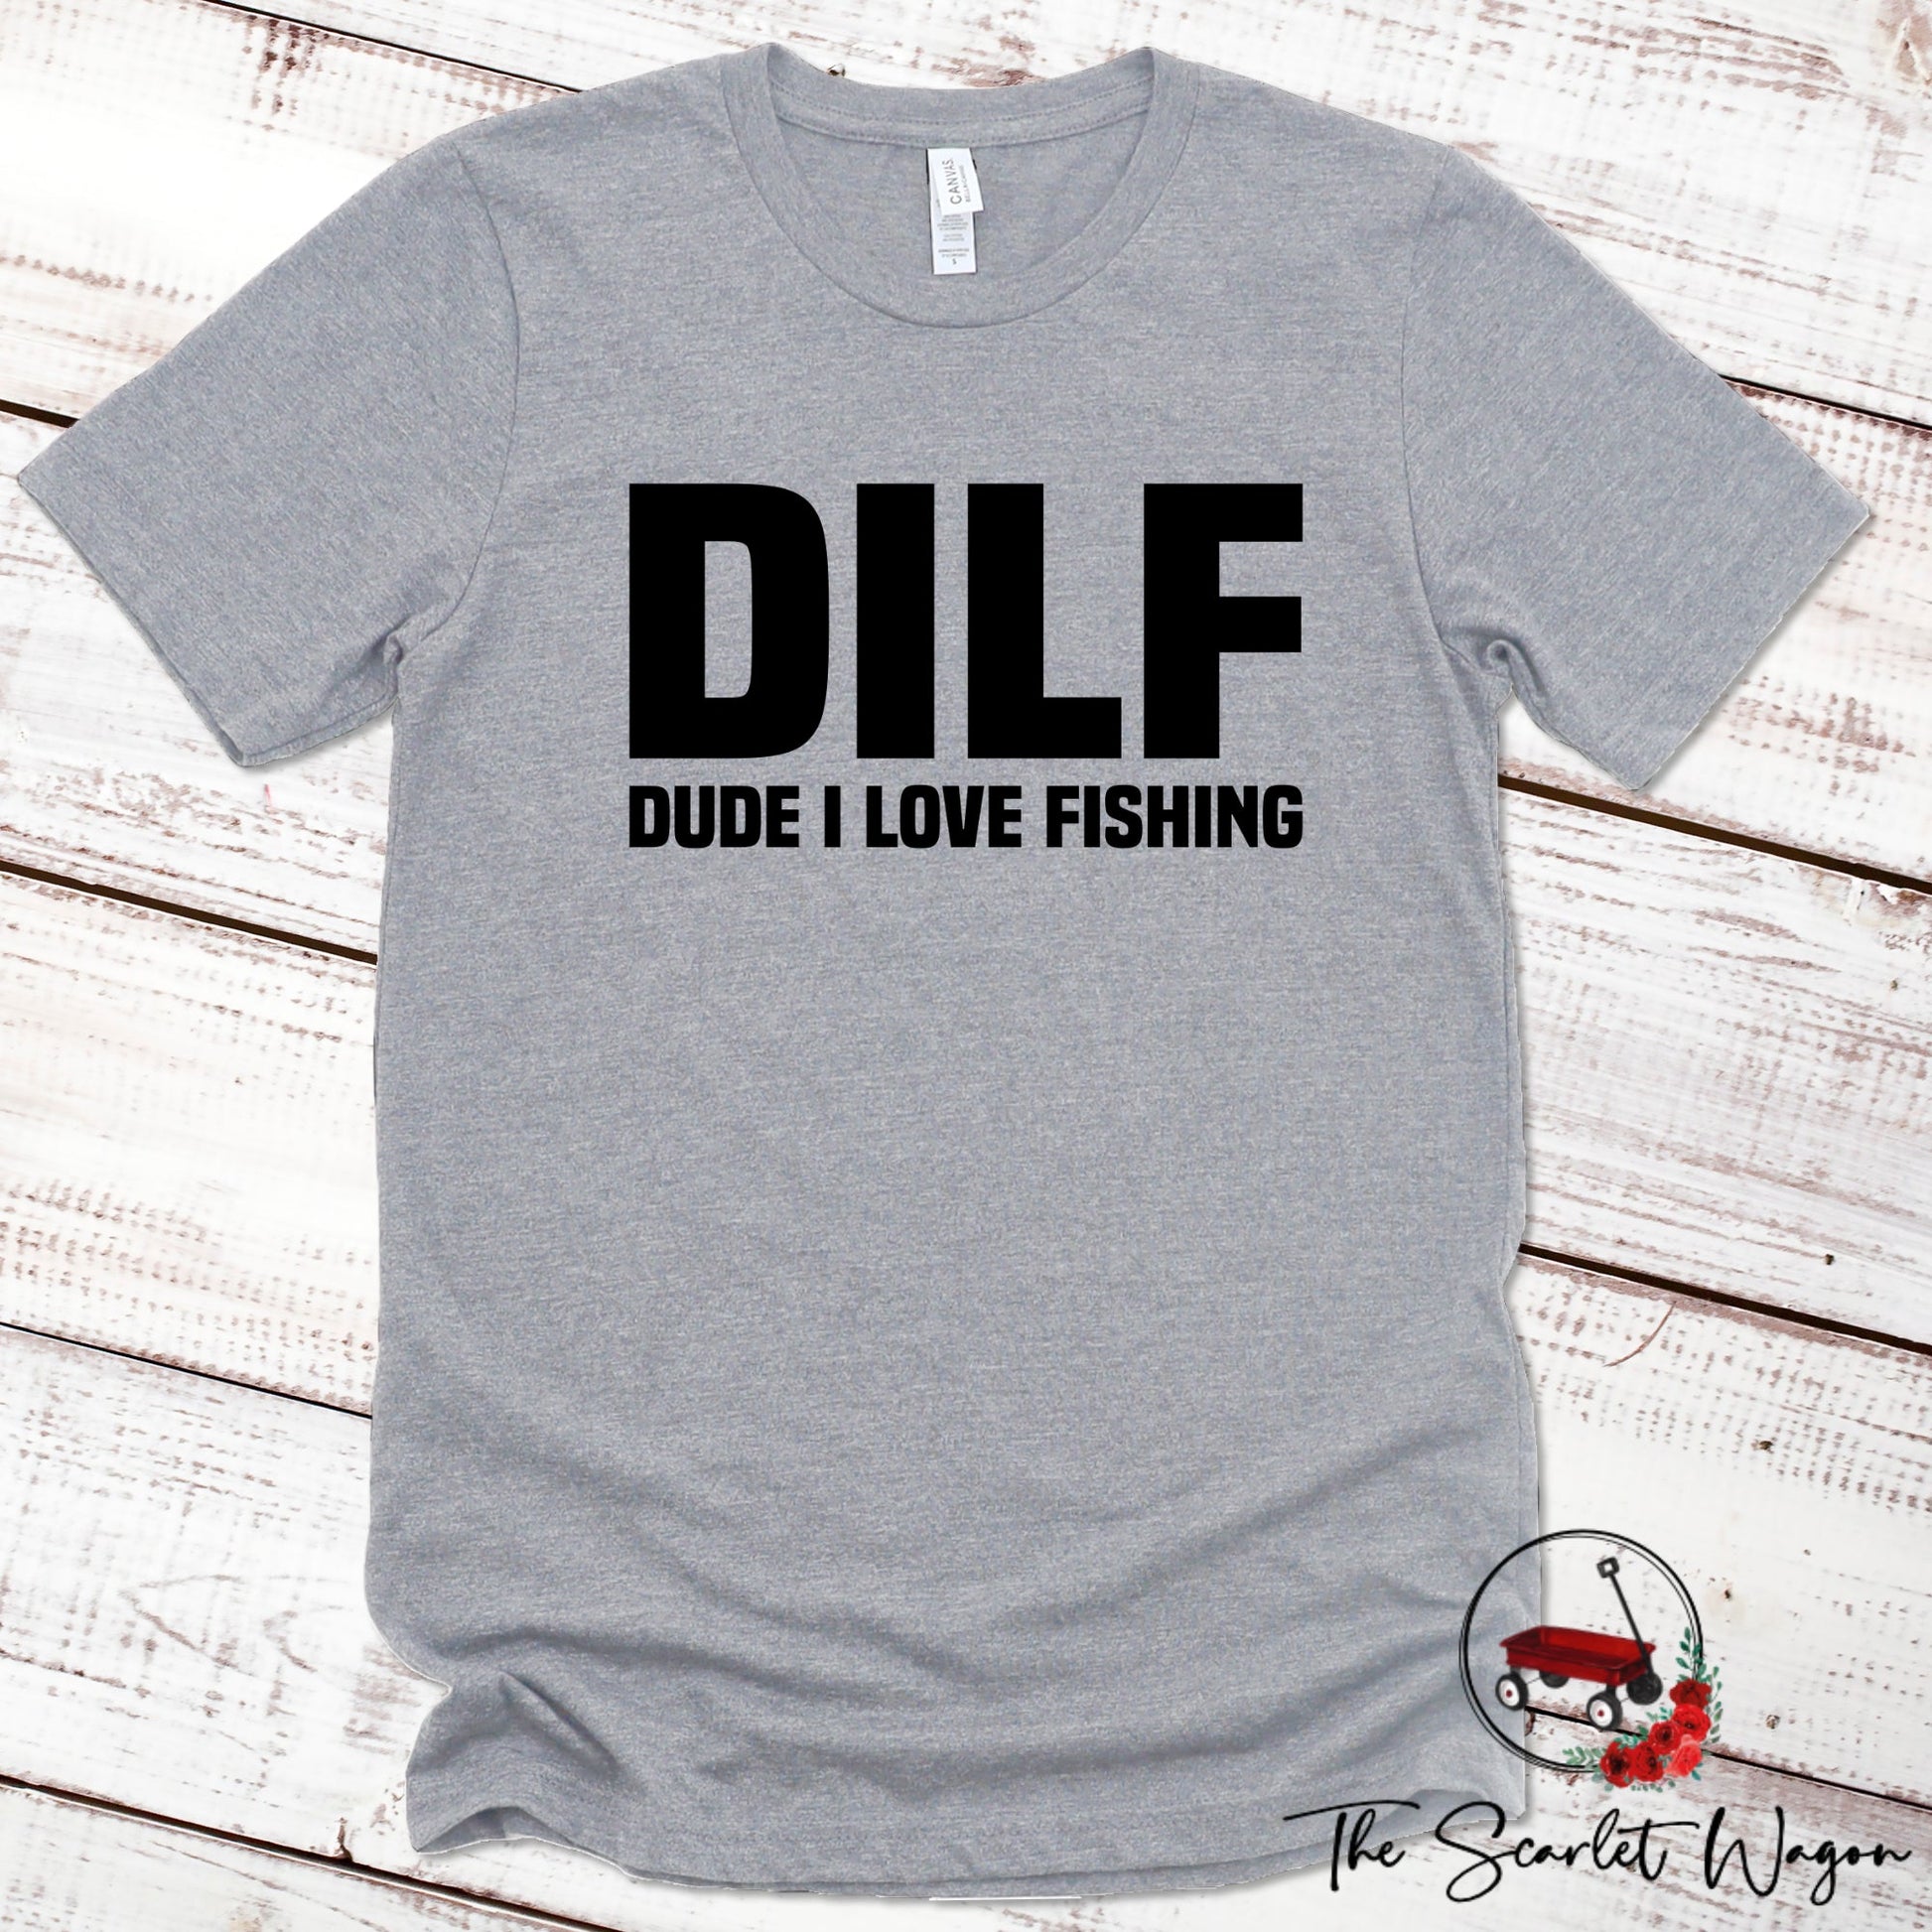 DILF - Dude I Love Fishing Premium Tee Scarlet Wagon Athletic Heather XS 